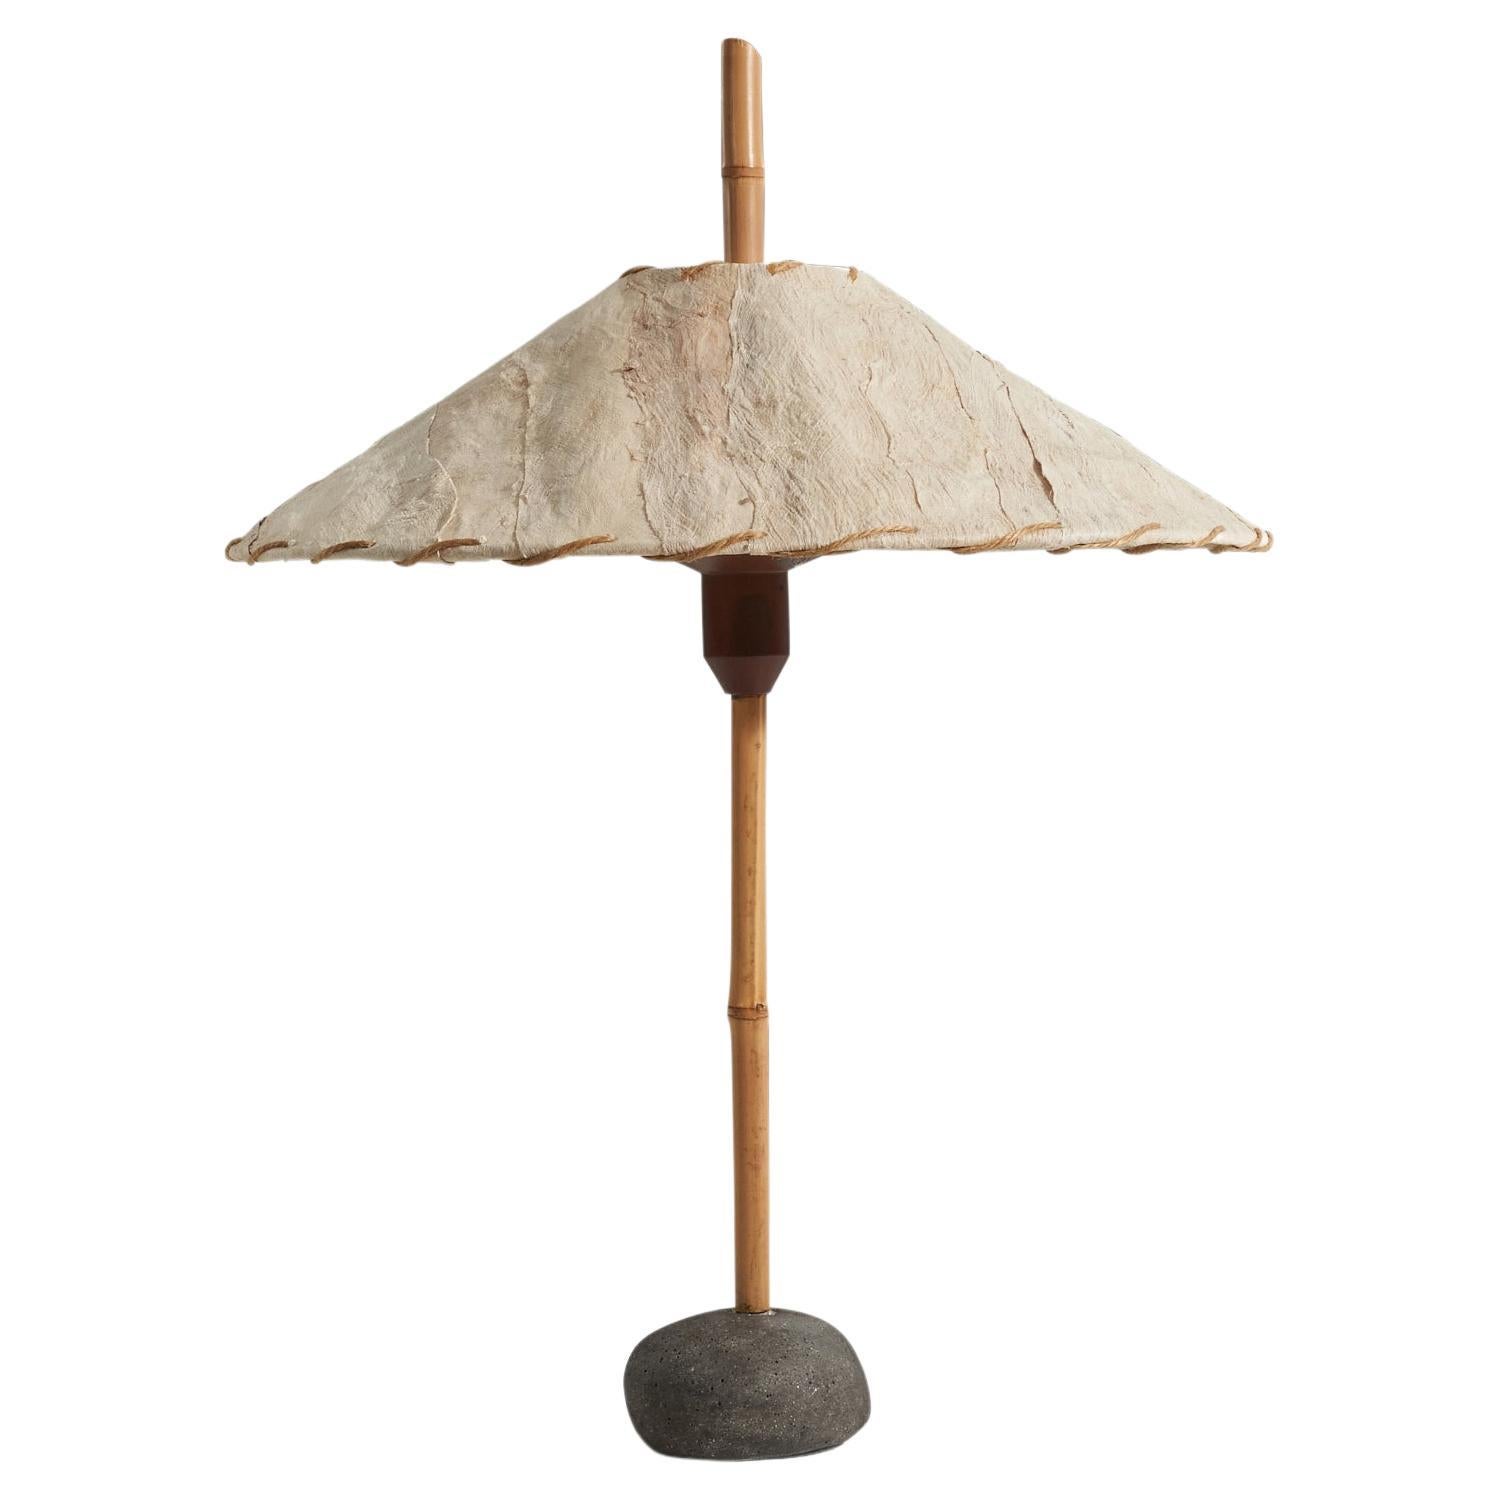 Robert Sonneman, "Safari" Table Lamp, Bamboo, Stone, Fabric, United States 1990s